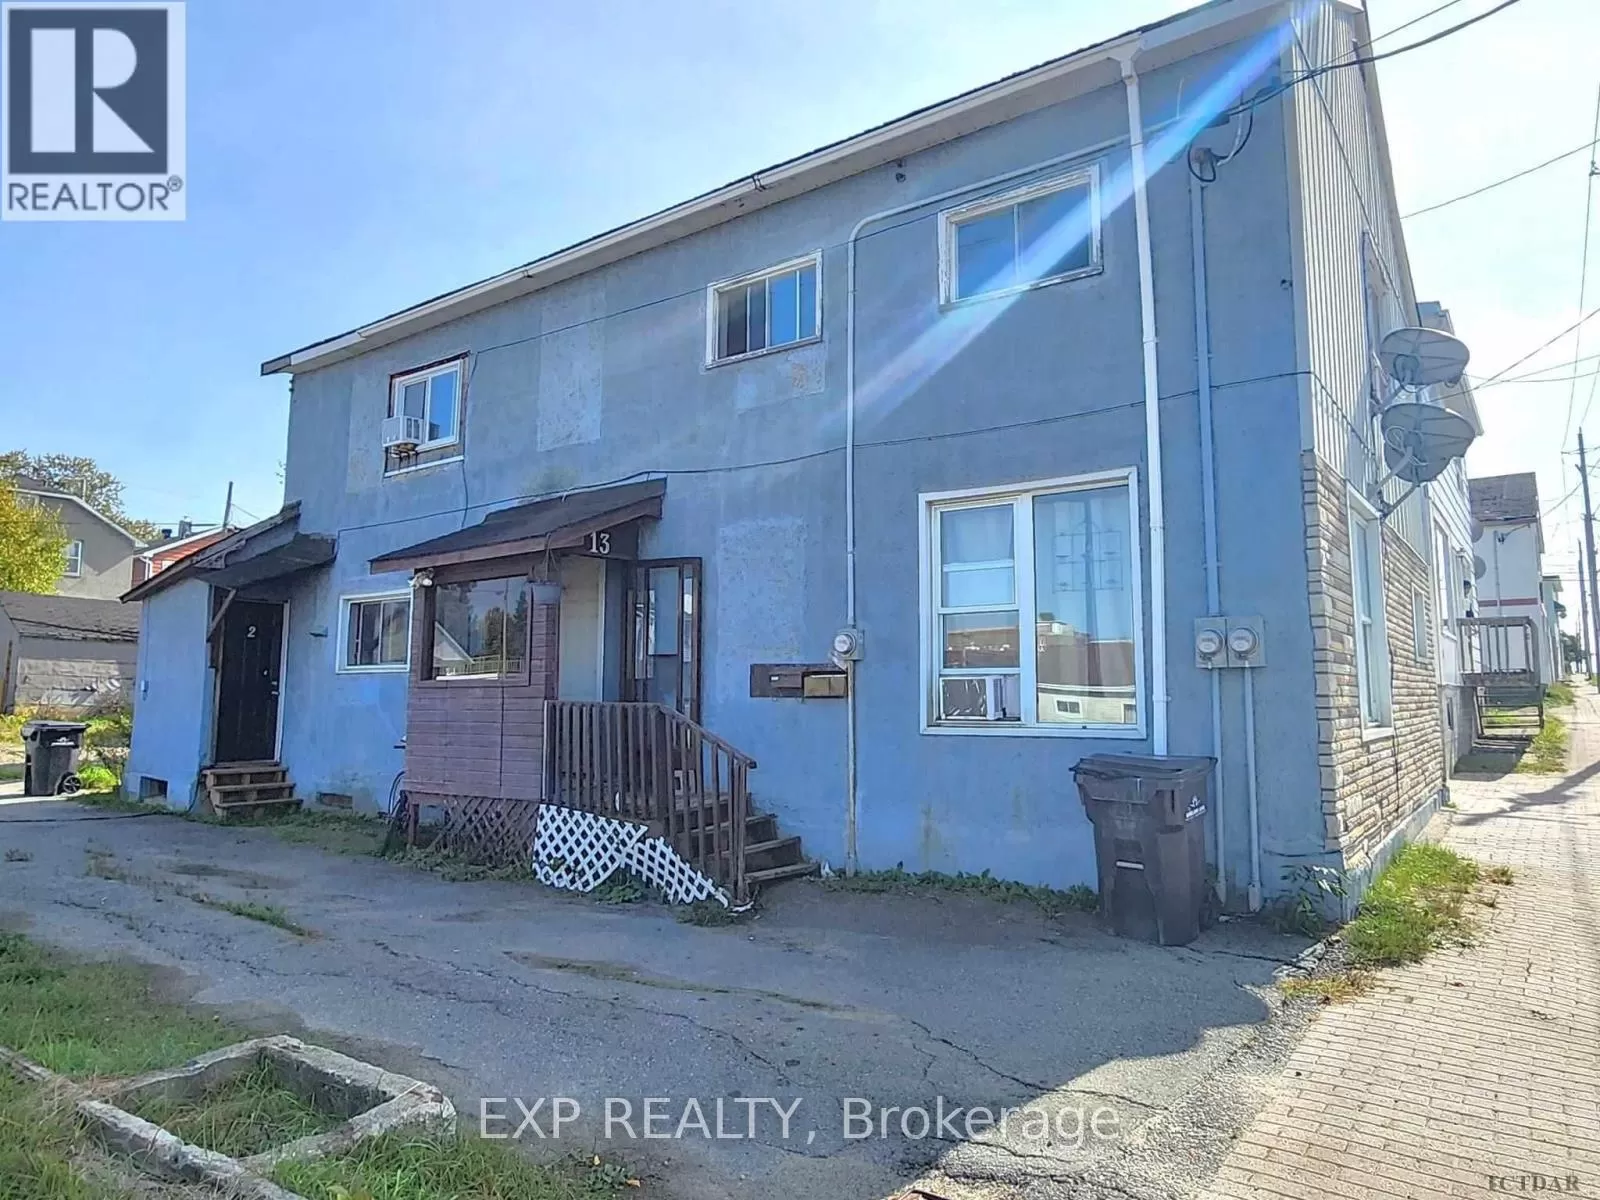 Duplex for rent: 13 Main St, Kirkland Lake, Ontario P2N 3C8